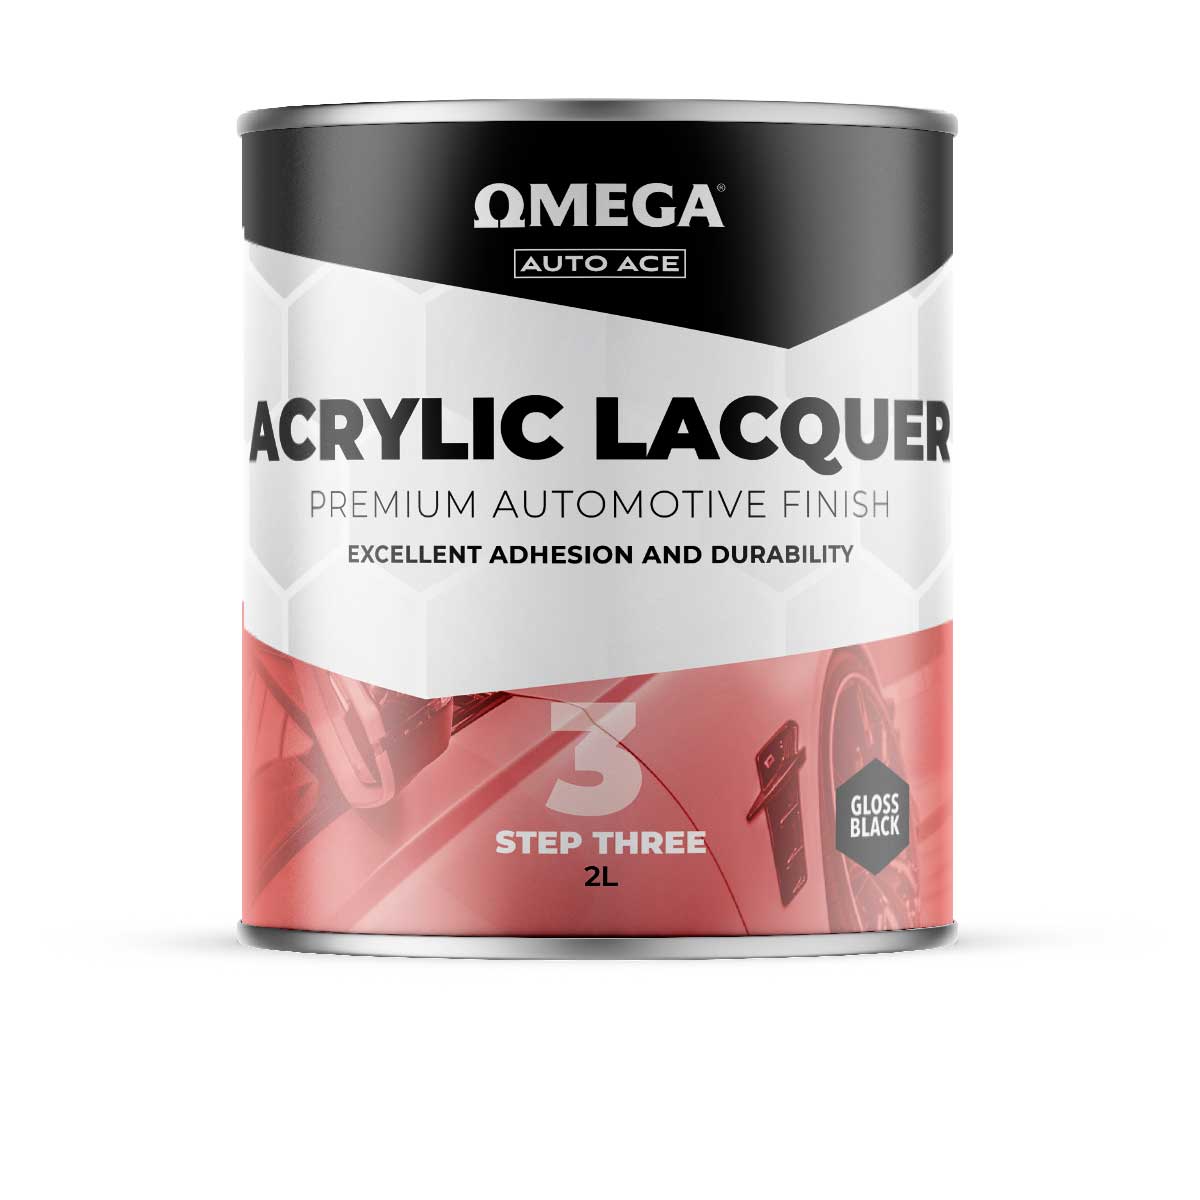 Omega Auto Ace Acrylic Lacquer Gloss Black 2lt